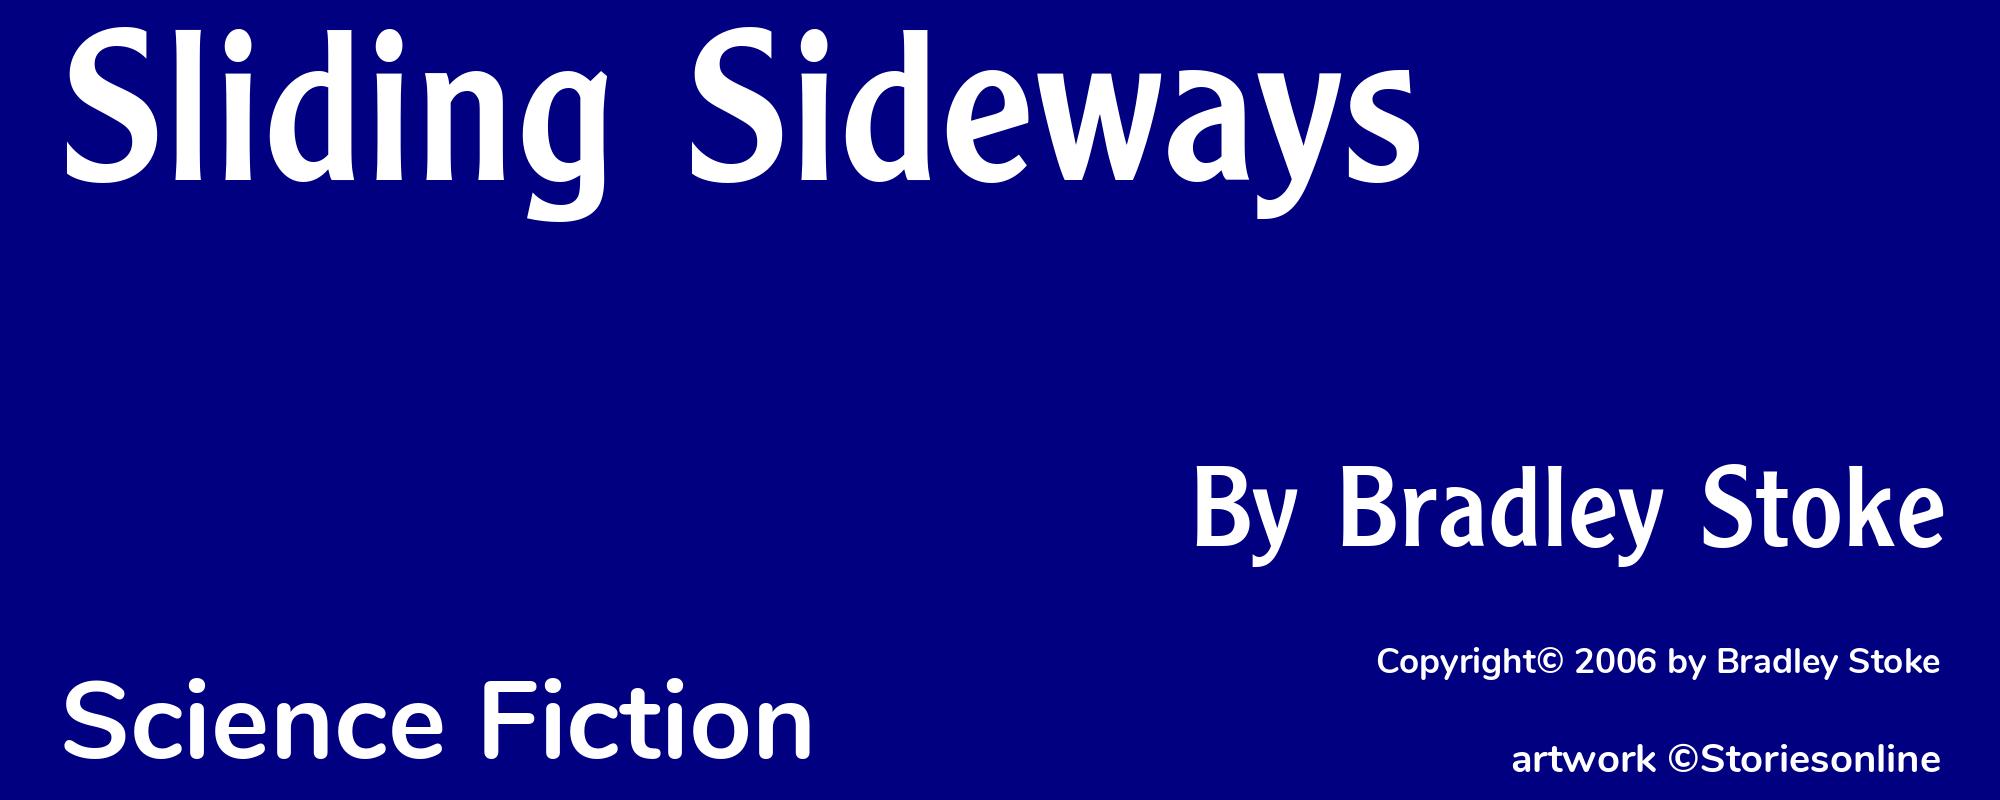 Sliding Sideways - Cover